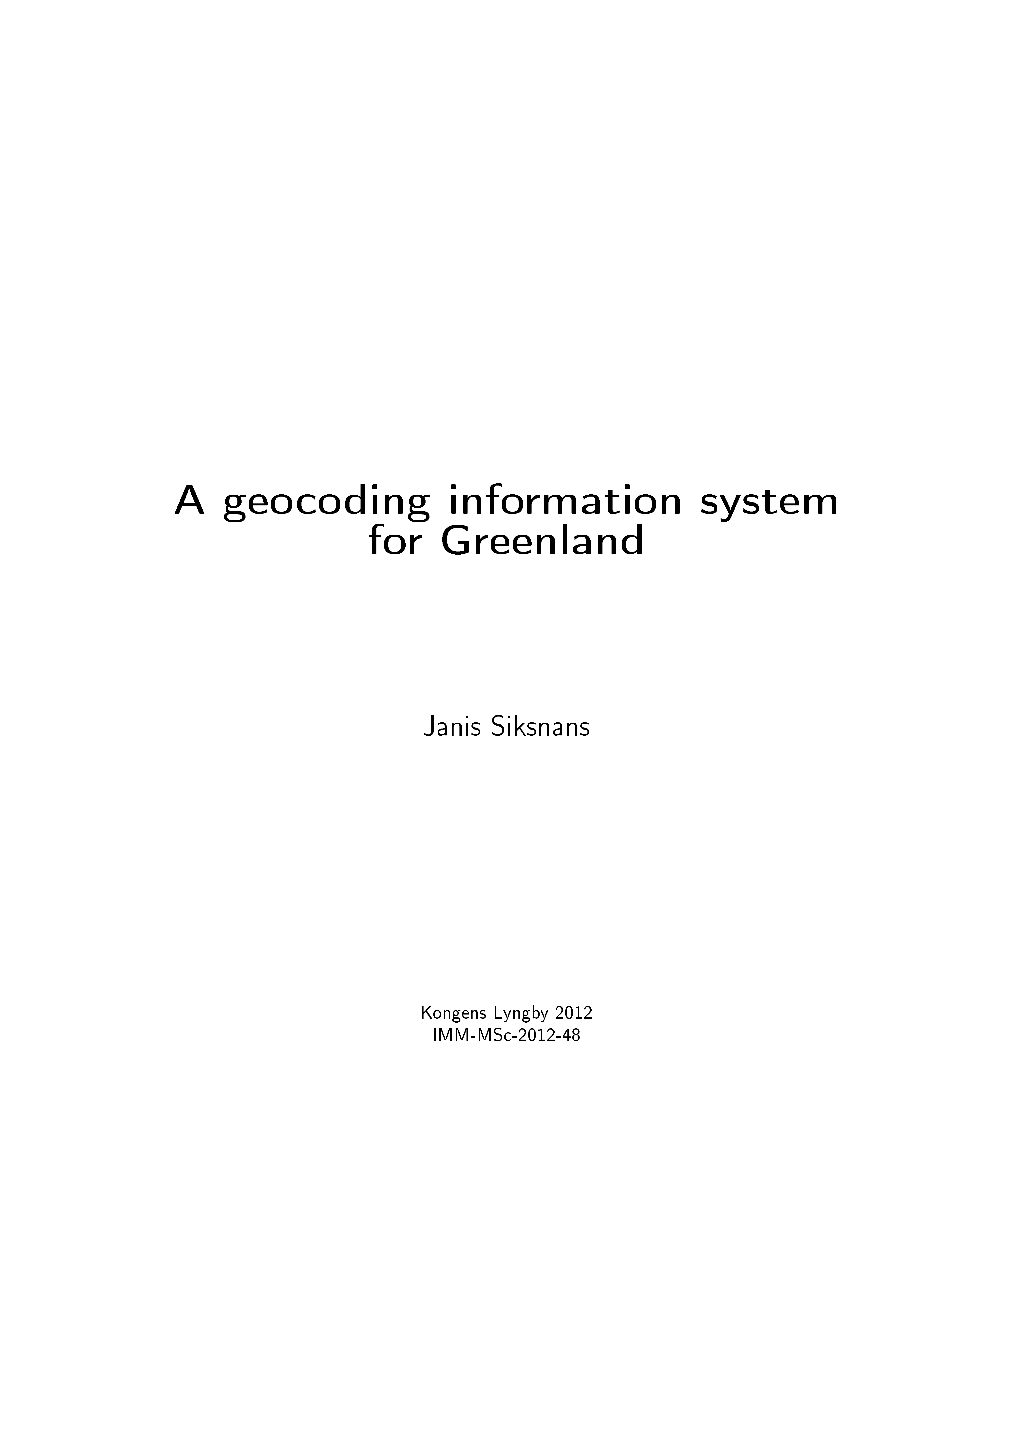 A Geocoding Information System for Greenland